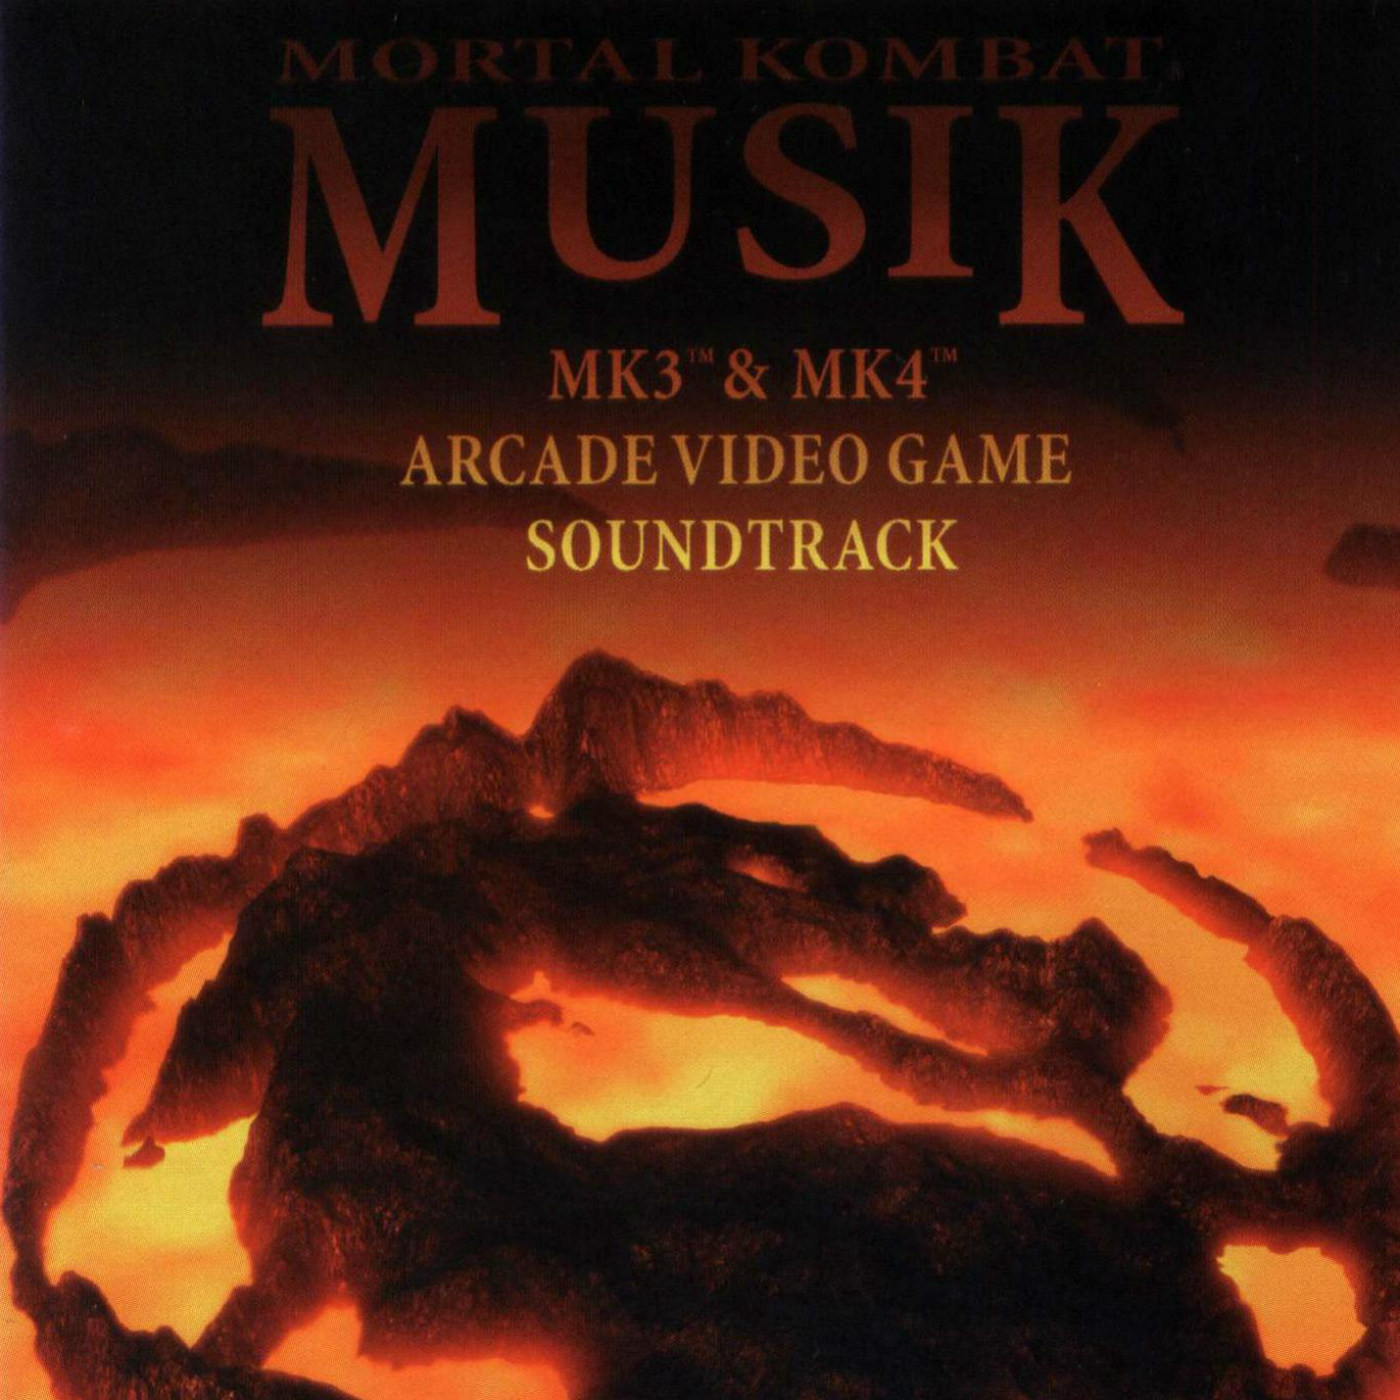 Mortal_Kombat_Musik_MK3__MK4_Arcade_Video_Game_Soundtrack__cover1400x1400.jpg